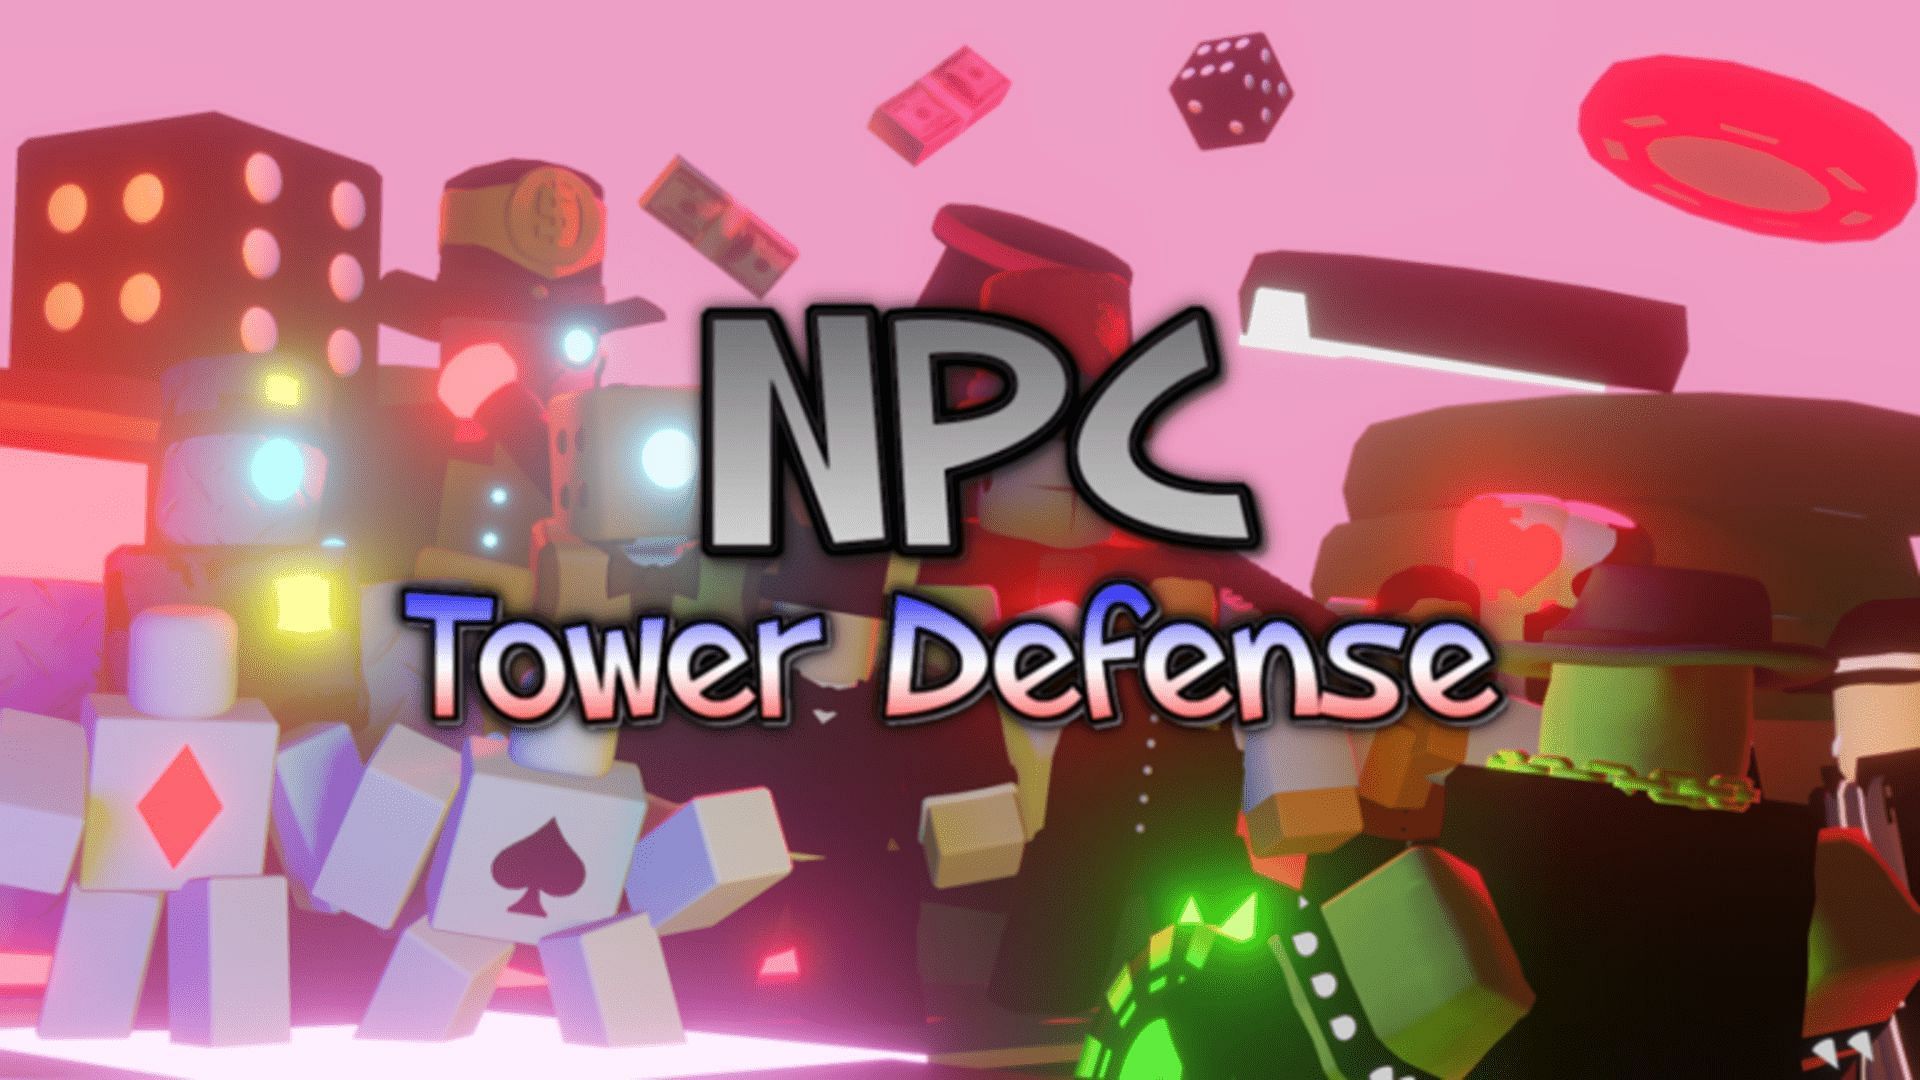 NPC Tower Defense codes